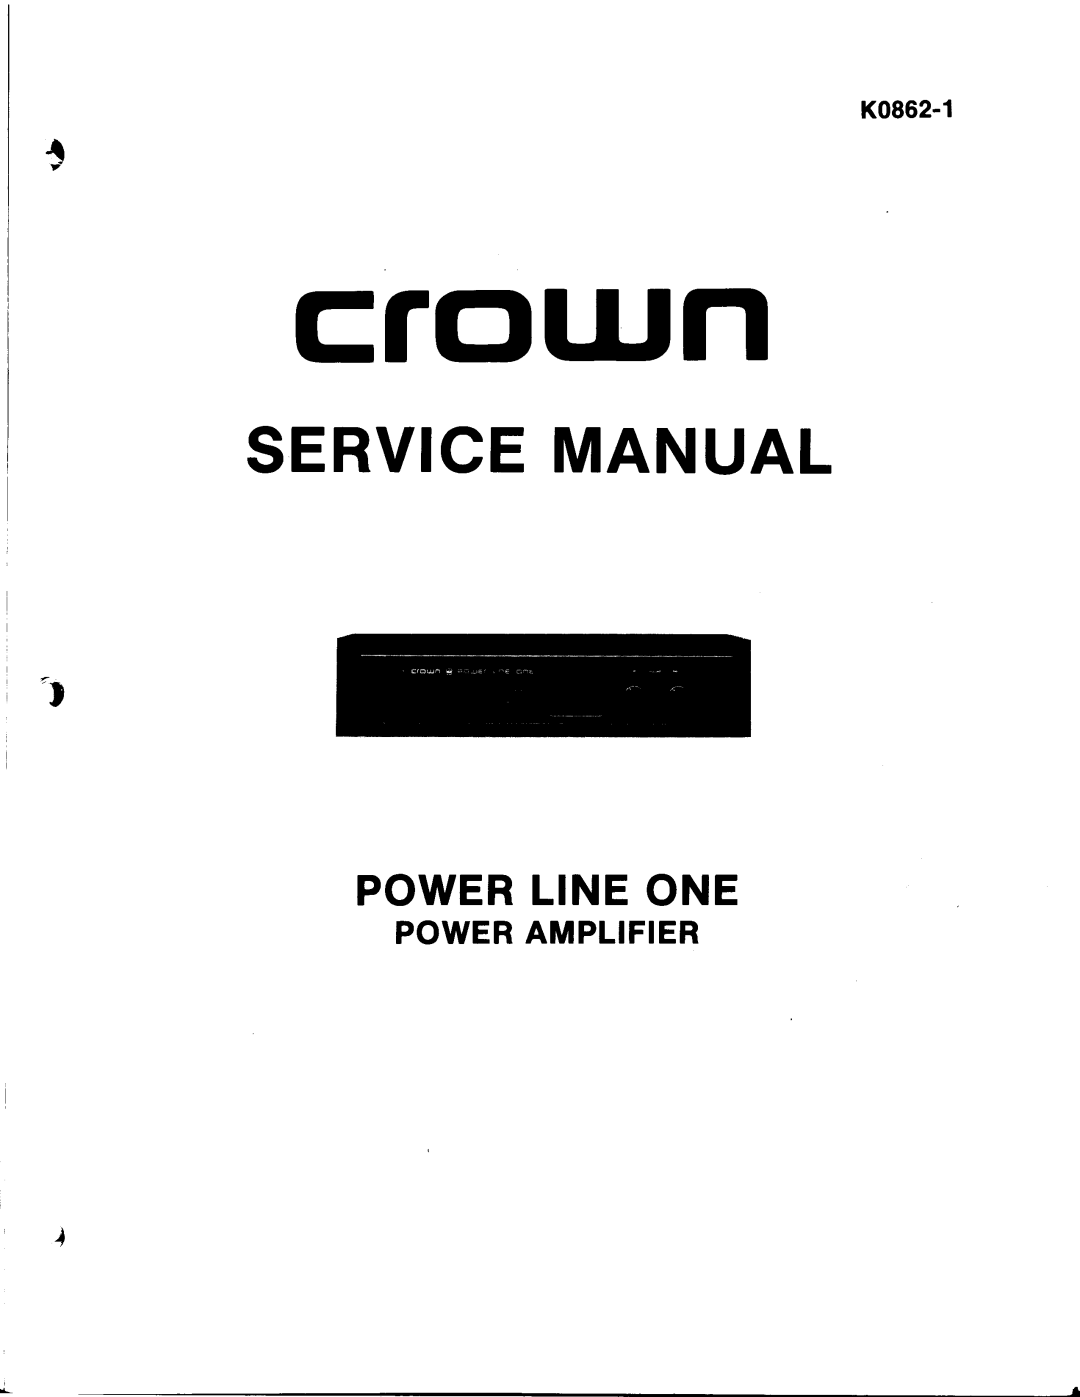 Crown K0862-1 manual 